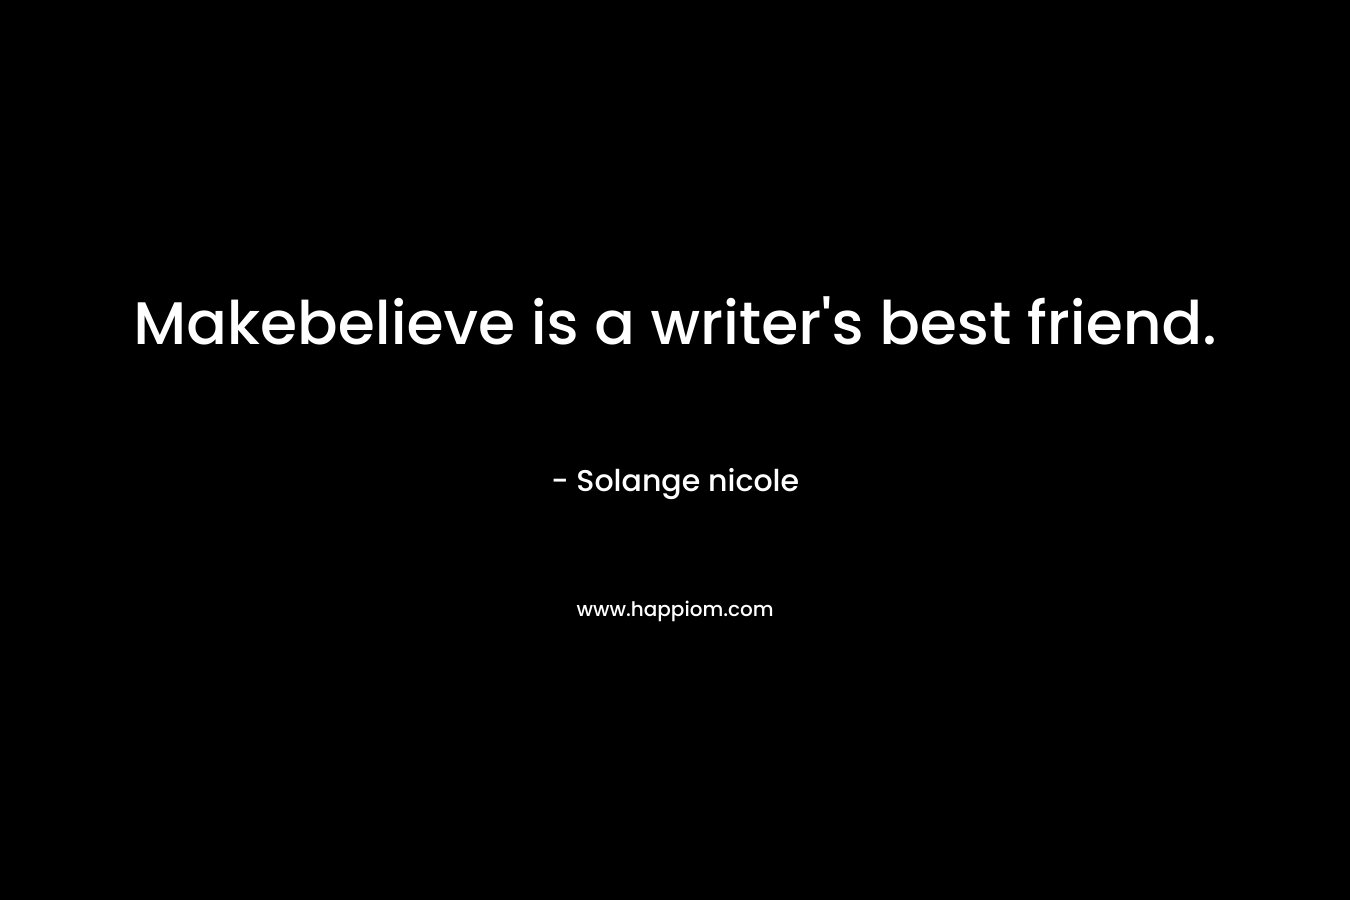 Makebelieve is a writer’s best friend. – Solange nicole